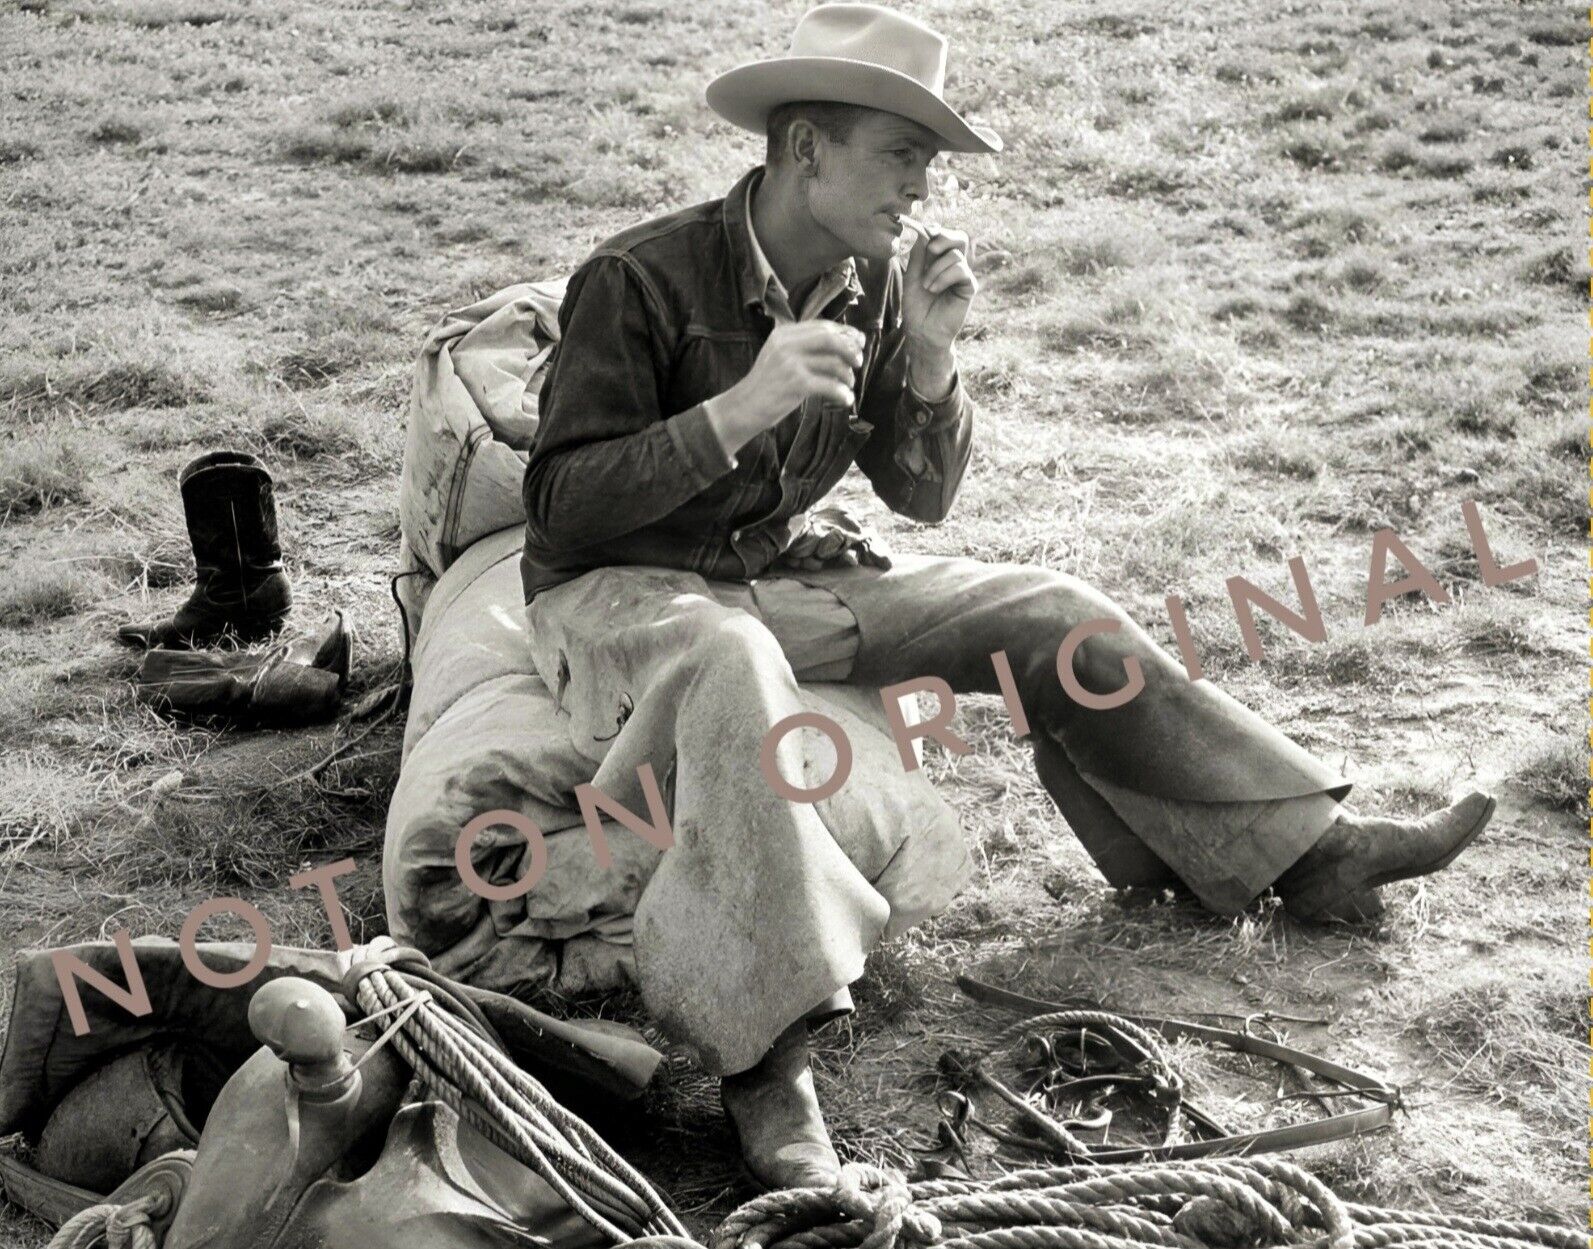 8x10 Vintage Photo High Def Reprint of Man Texas COWBOY Rolling a Cigarette 